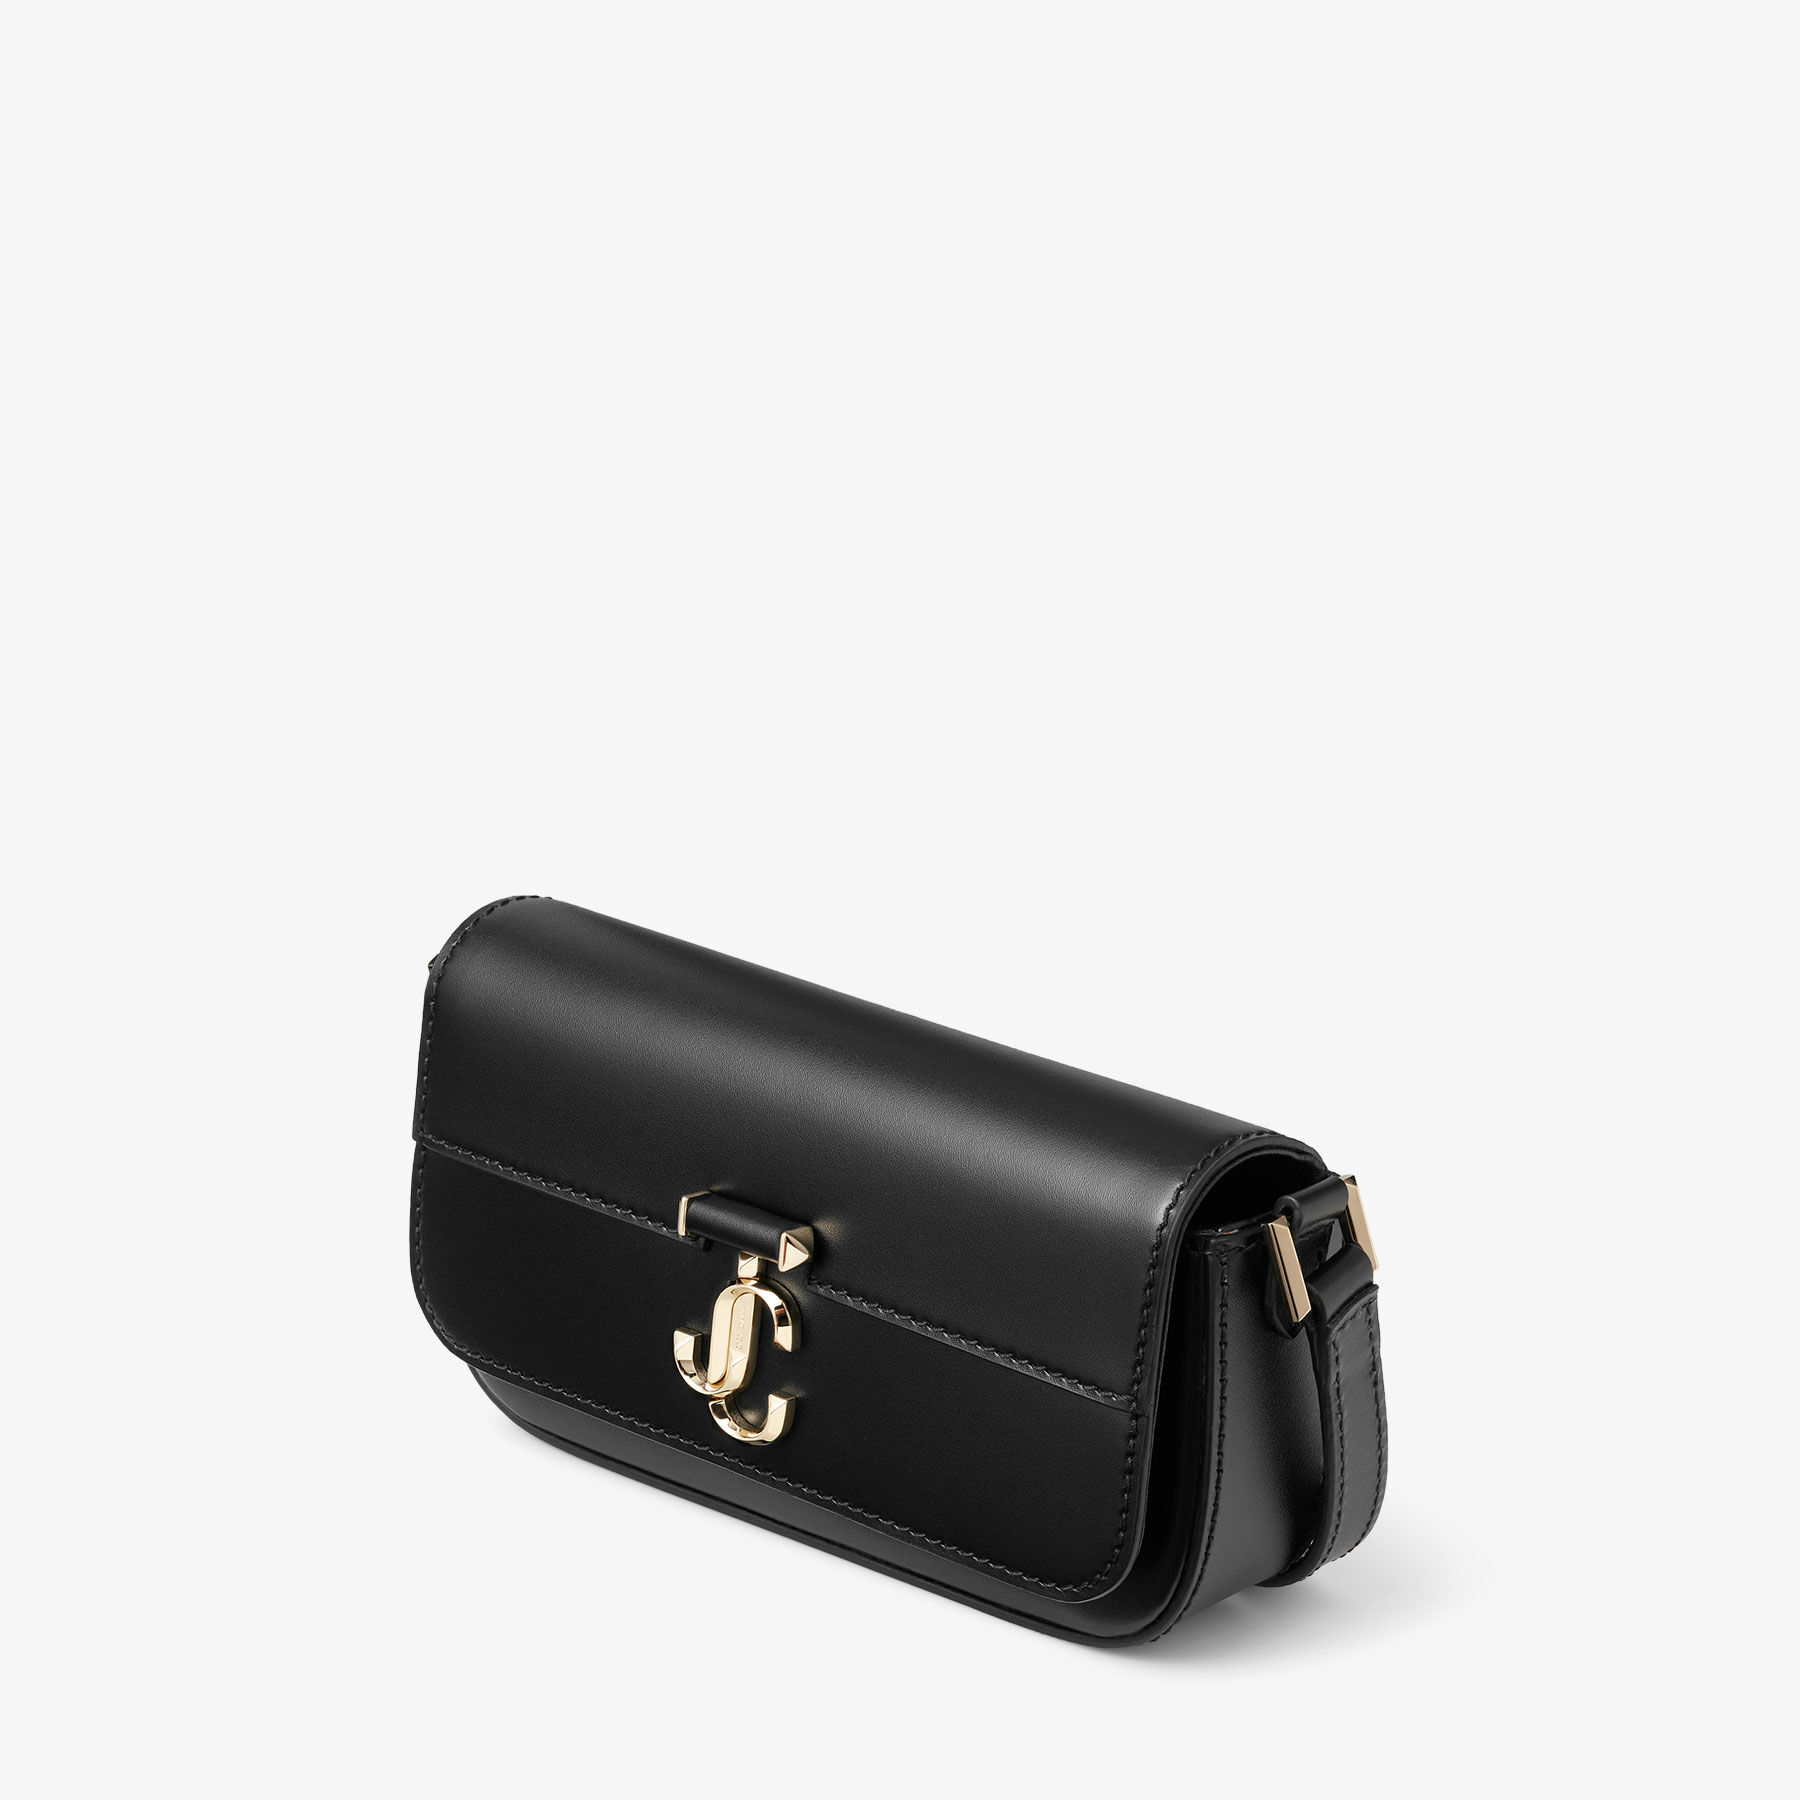 AVENUE MINI SHLDR | Black Leather Mini Shoulder Bag with JC Emblem 